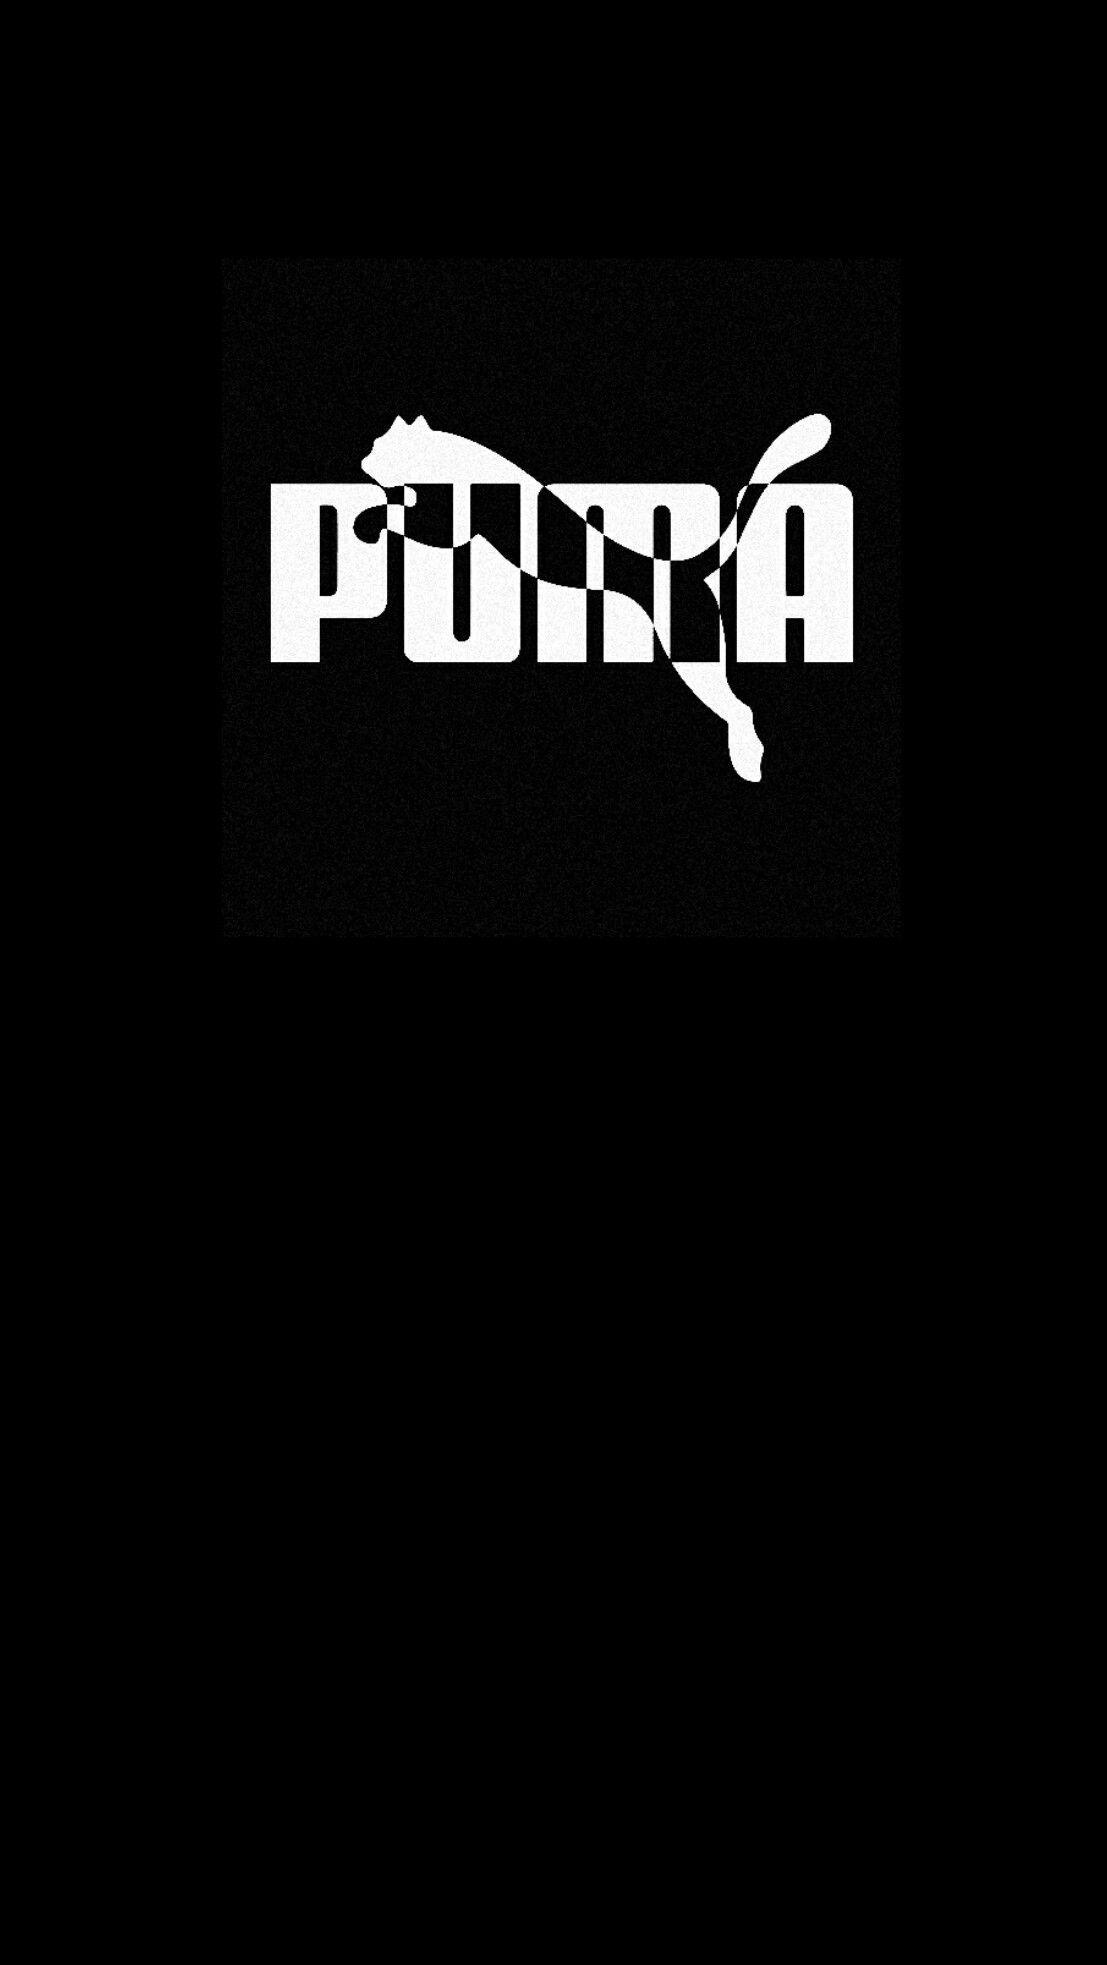 Puma Black and White Logo - puma #black #wallpaper #iPhone #android | PUMA in 2019 | Iphone ...